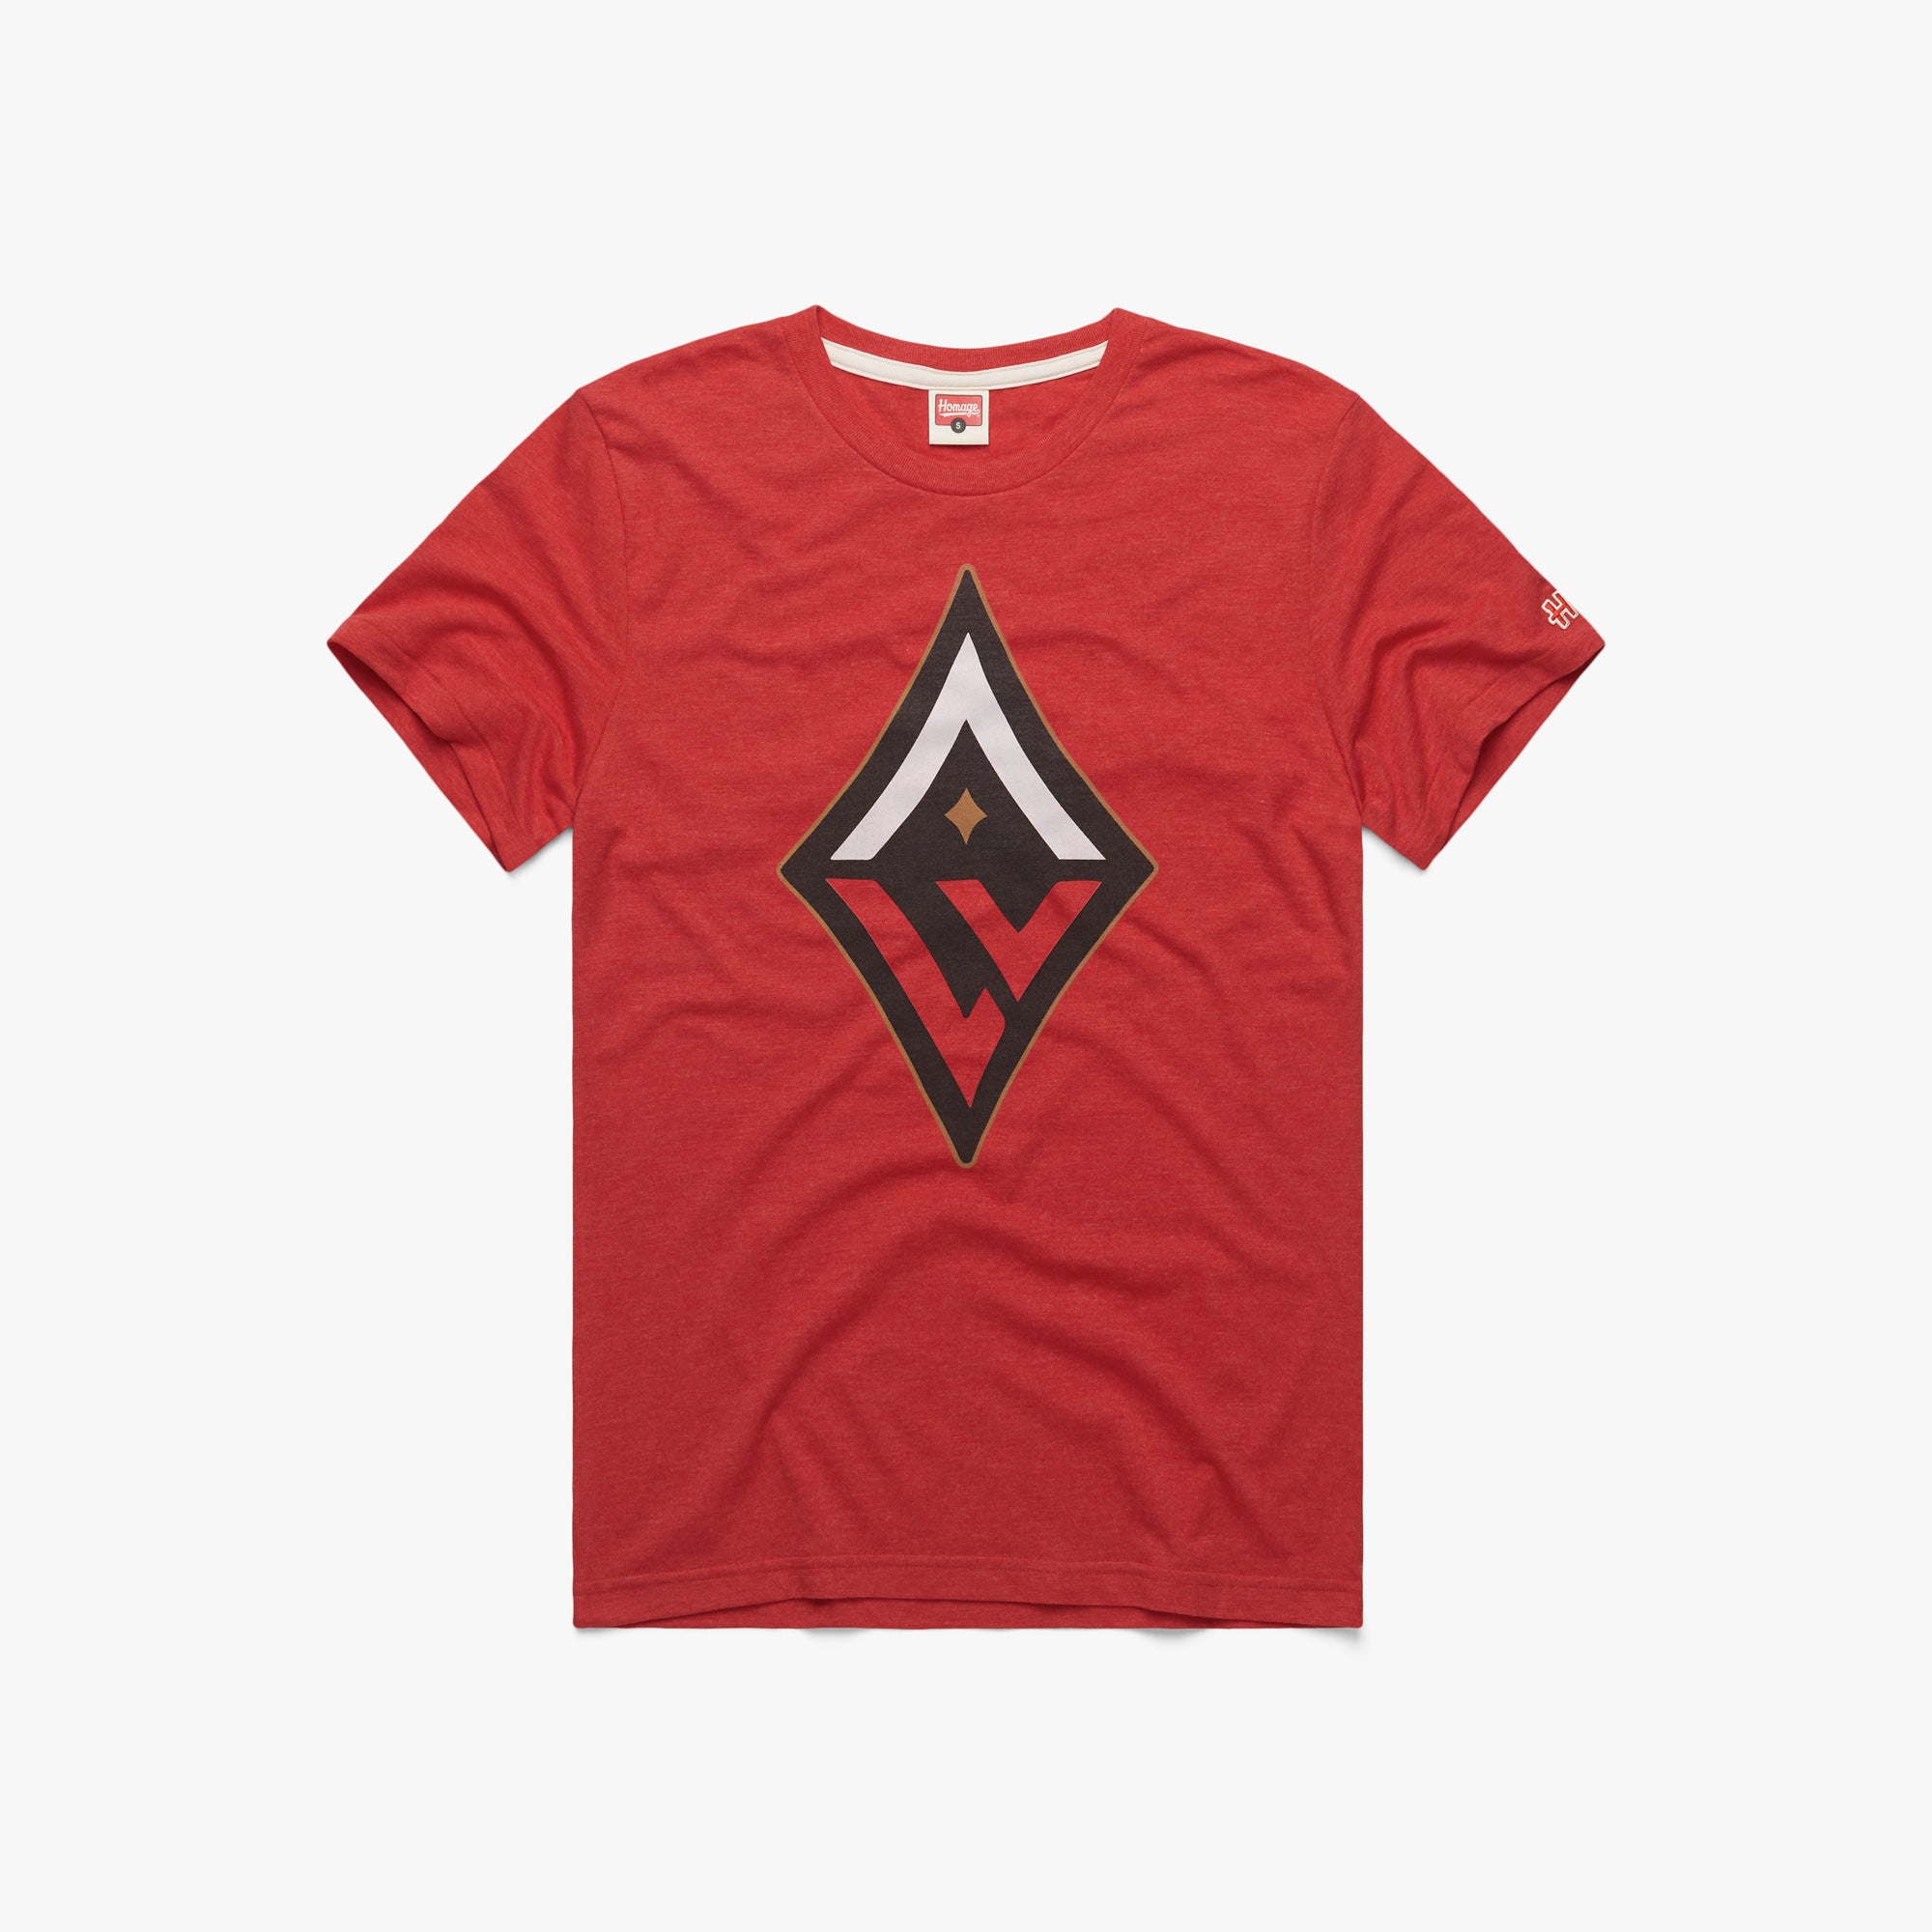 Las Vegas Aces Red Logo T Shirt